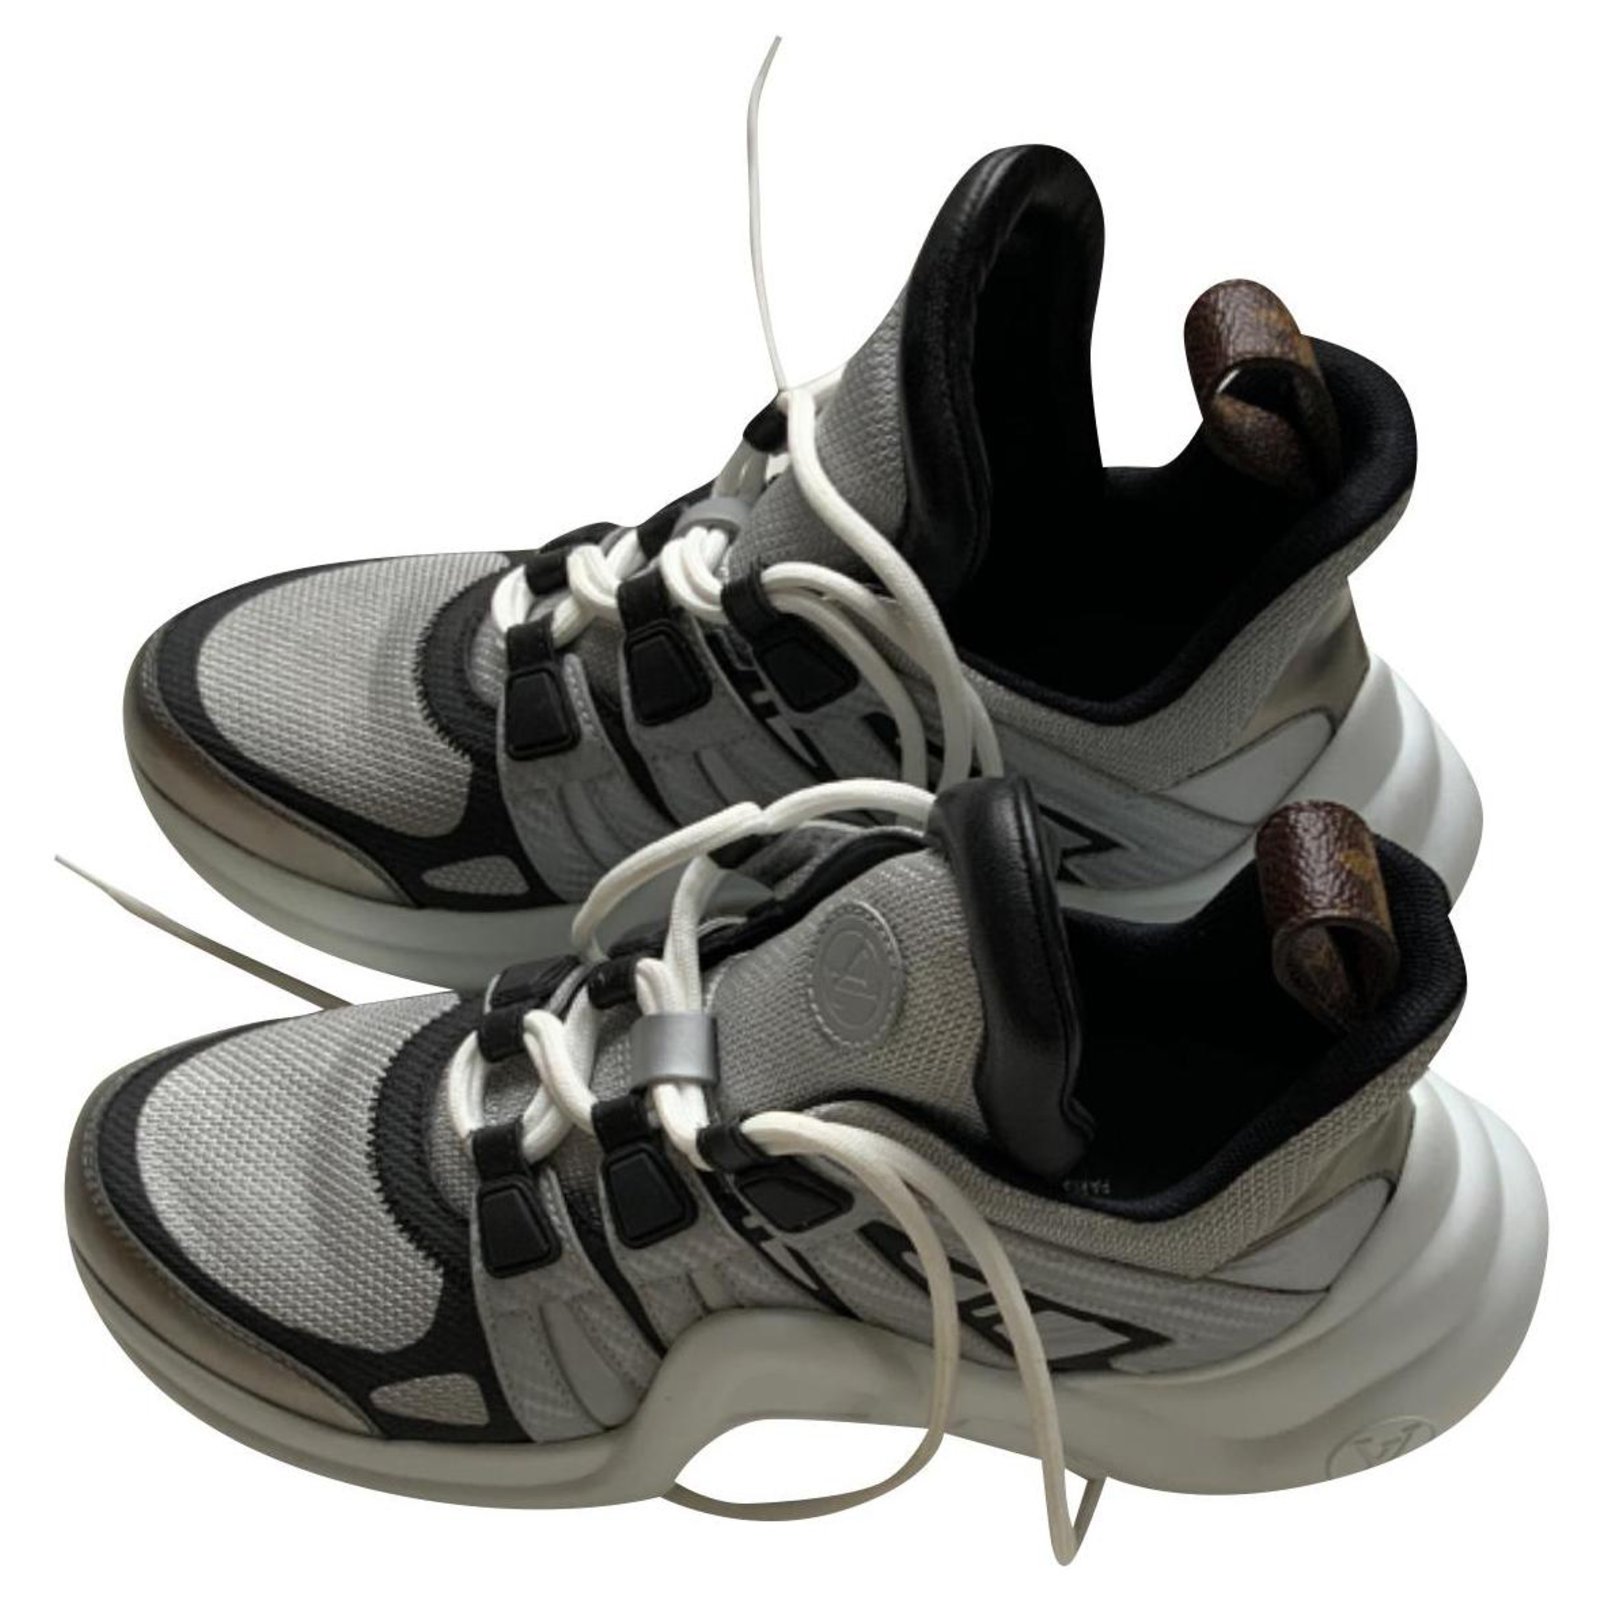 Louis Vuitton LV Archlight Sneaker Boot - Noir